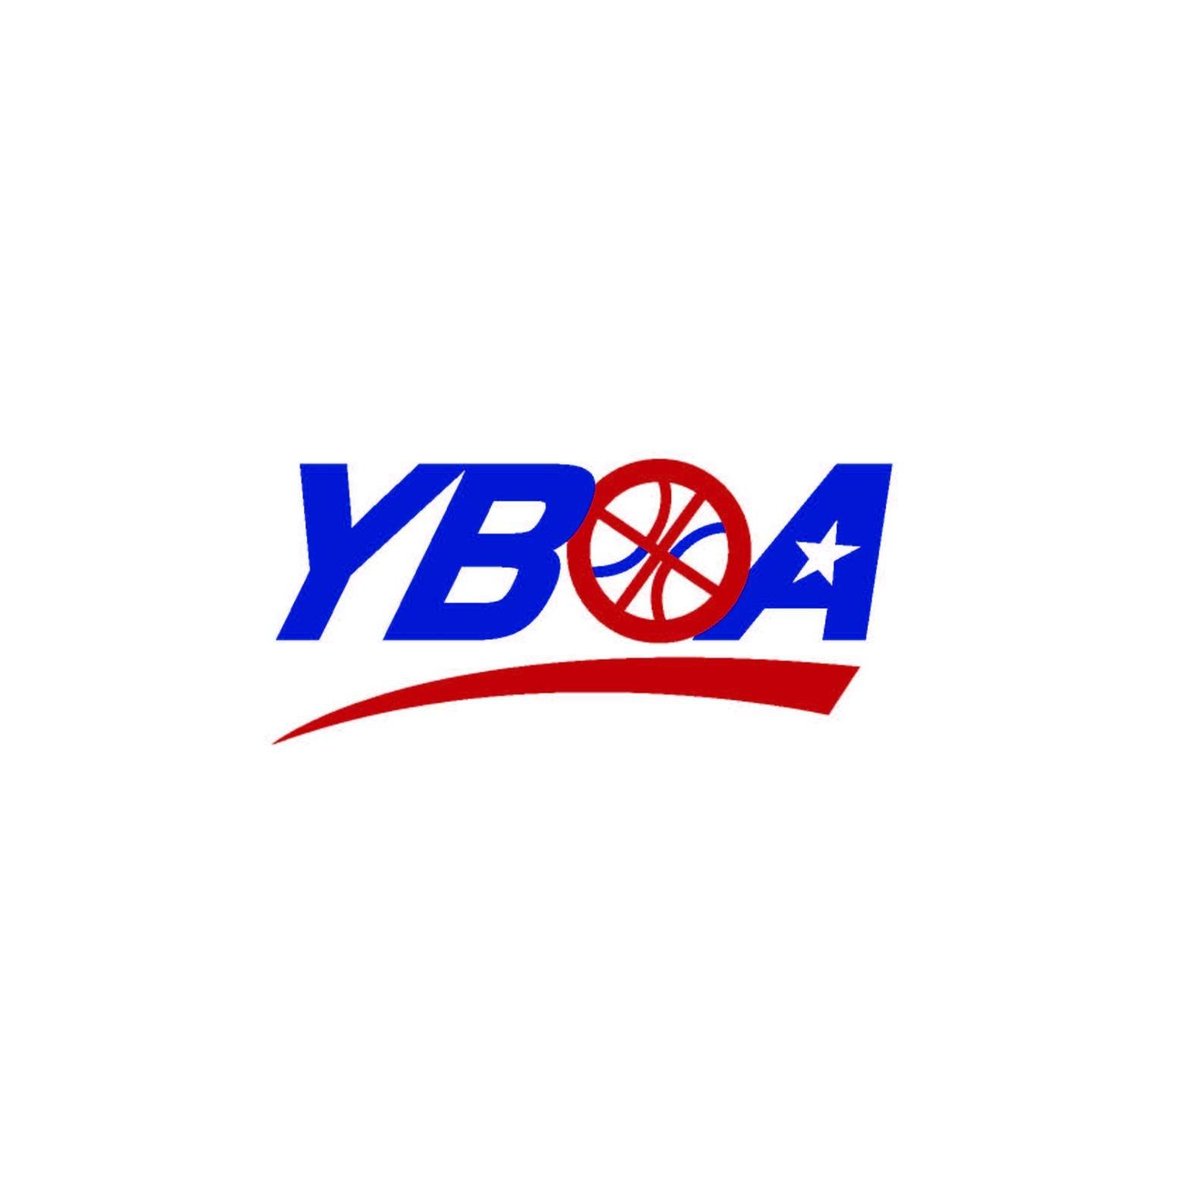 YBOA Rochester Rumble